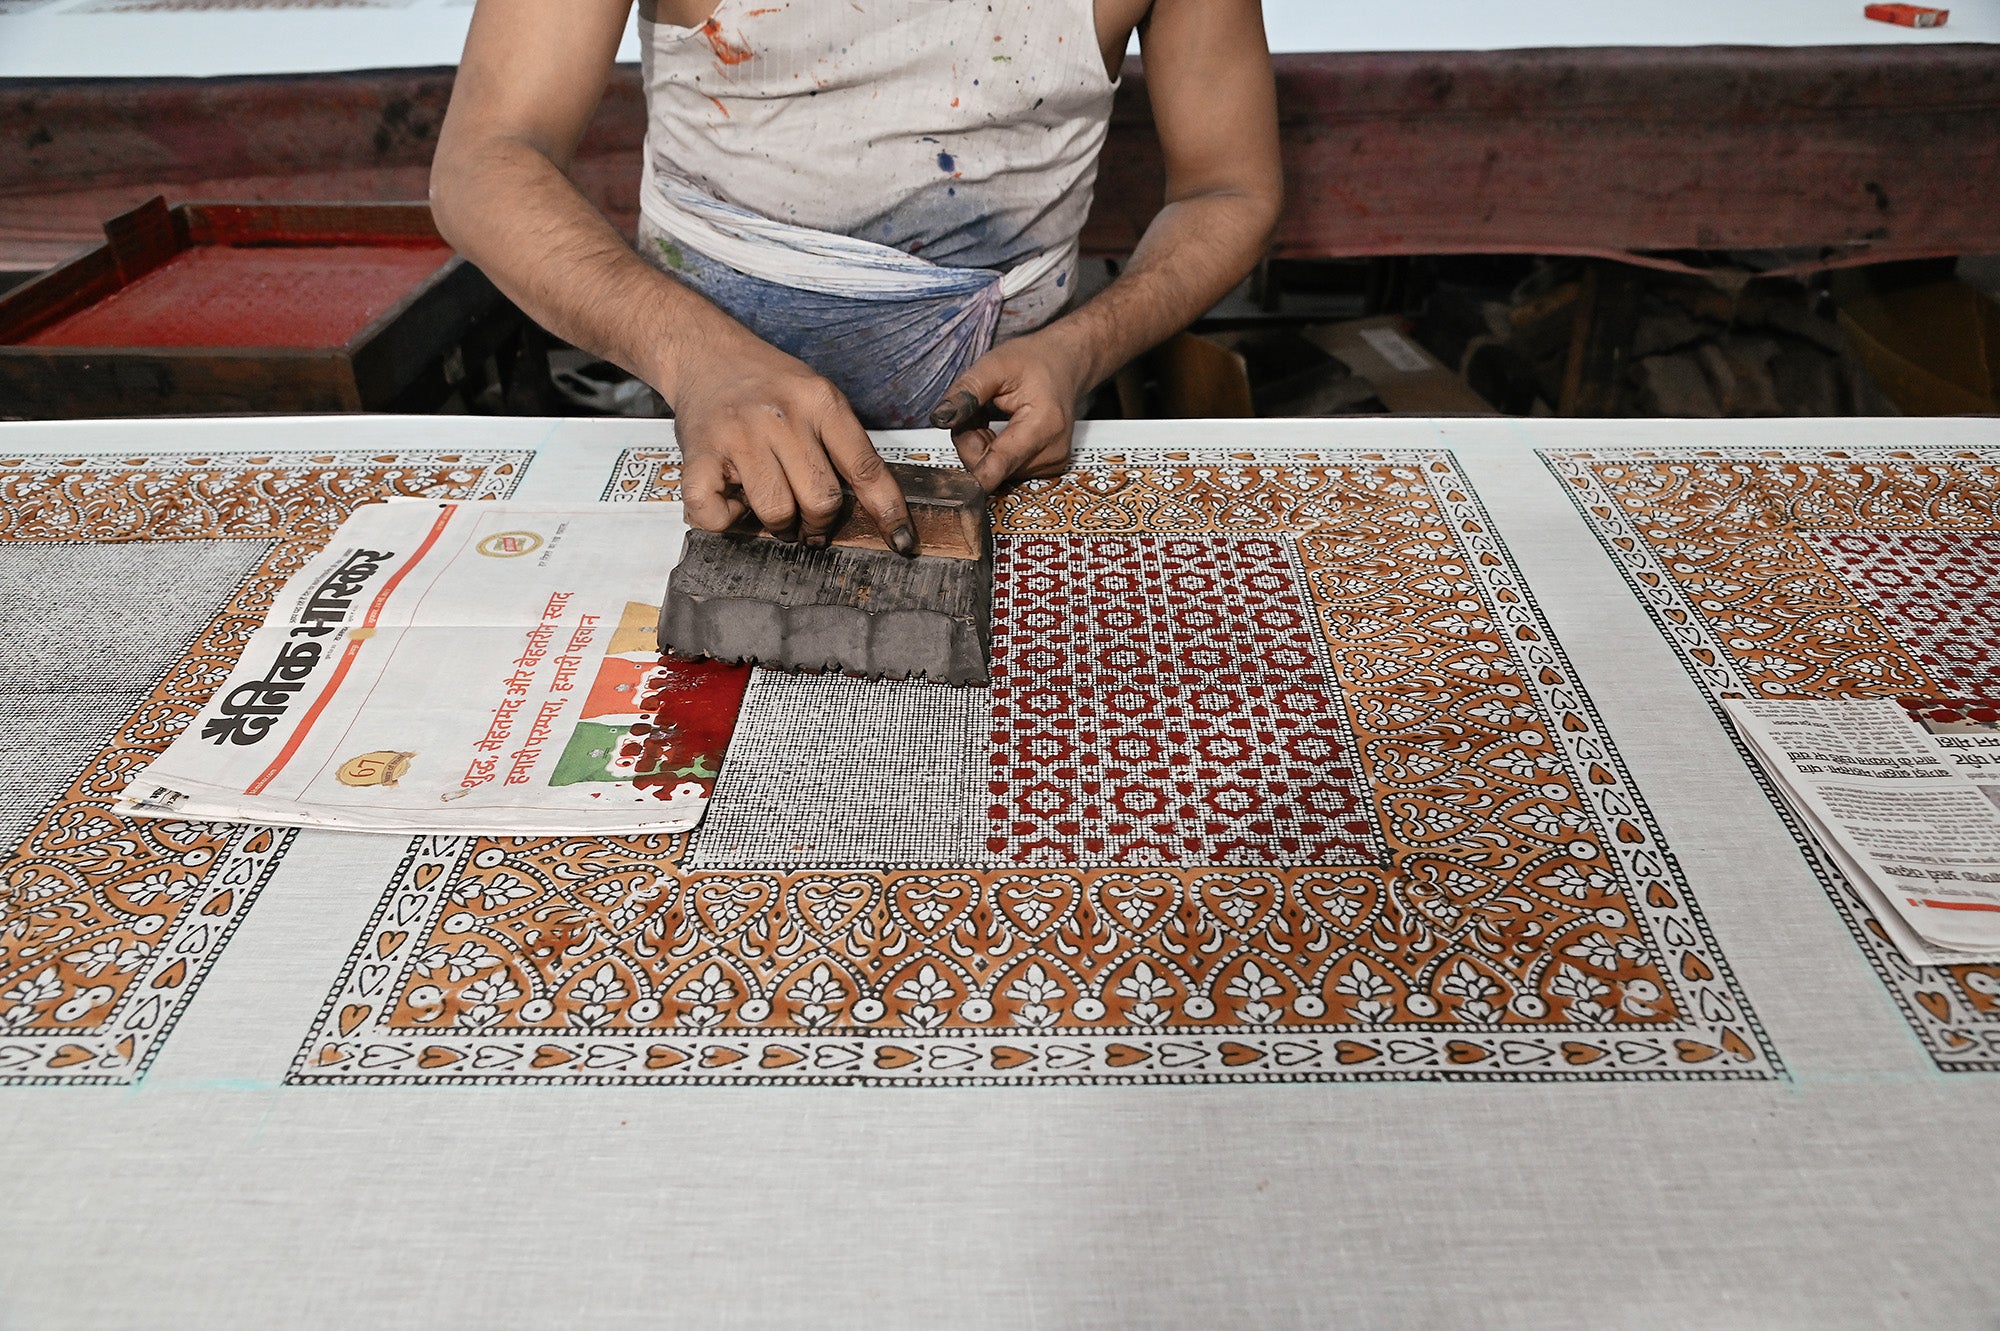 Artist block printing a cotton bandana